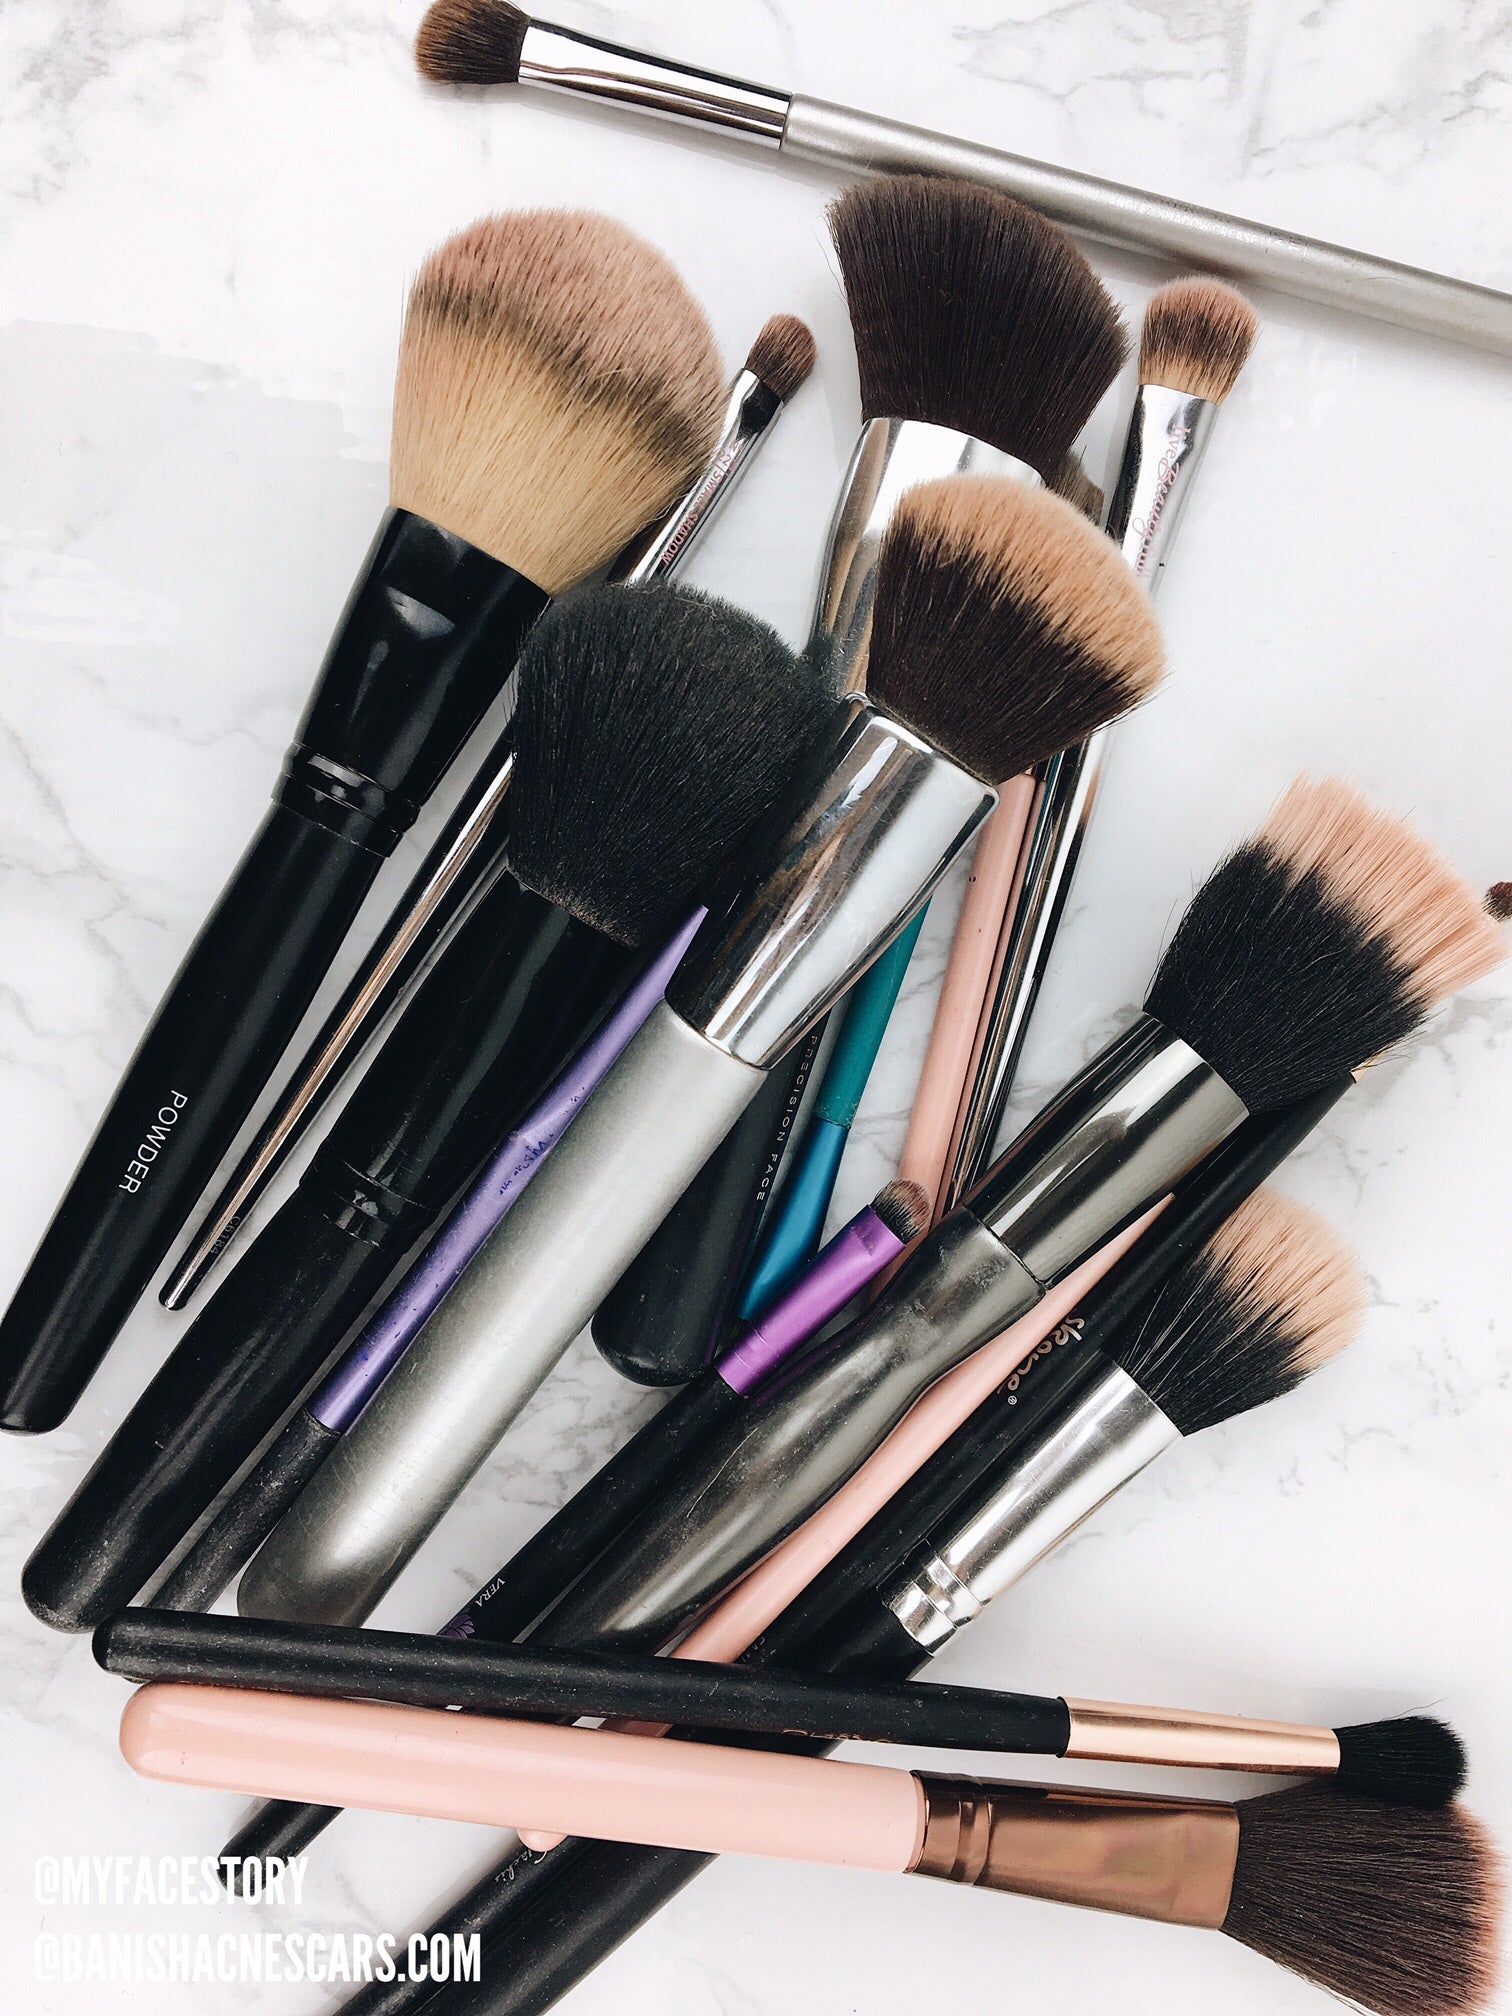 washing makeup brushes to avoid acne